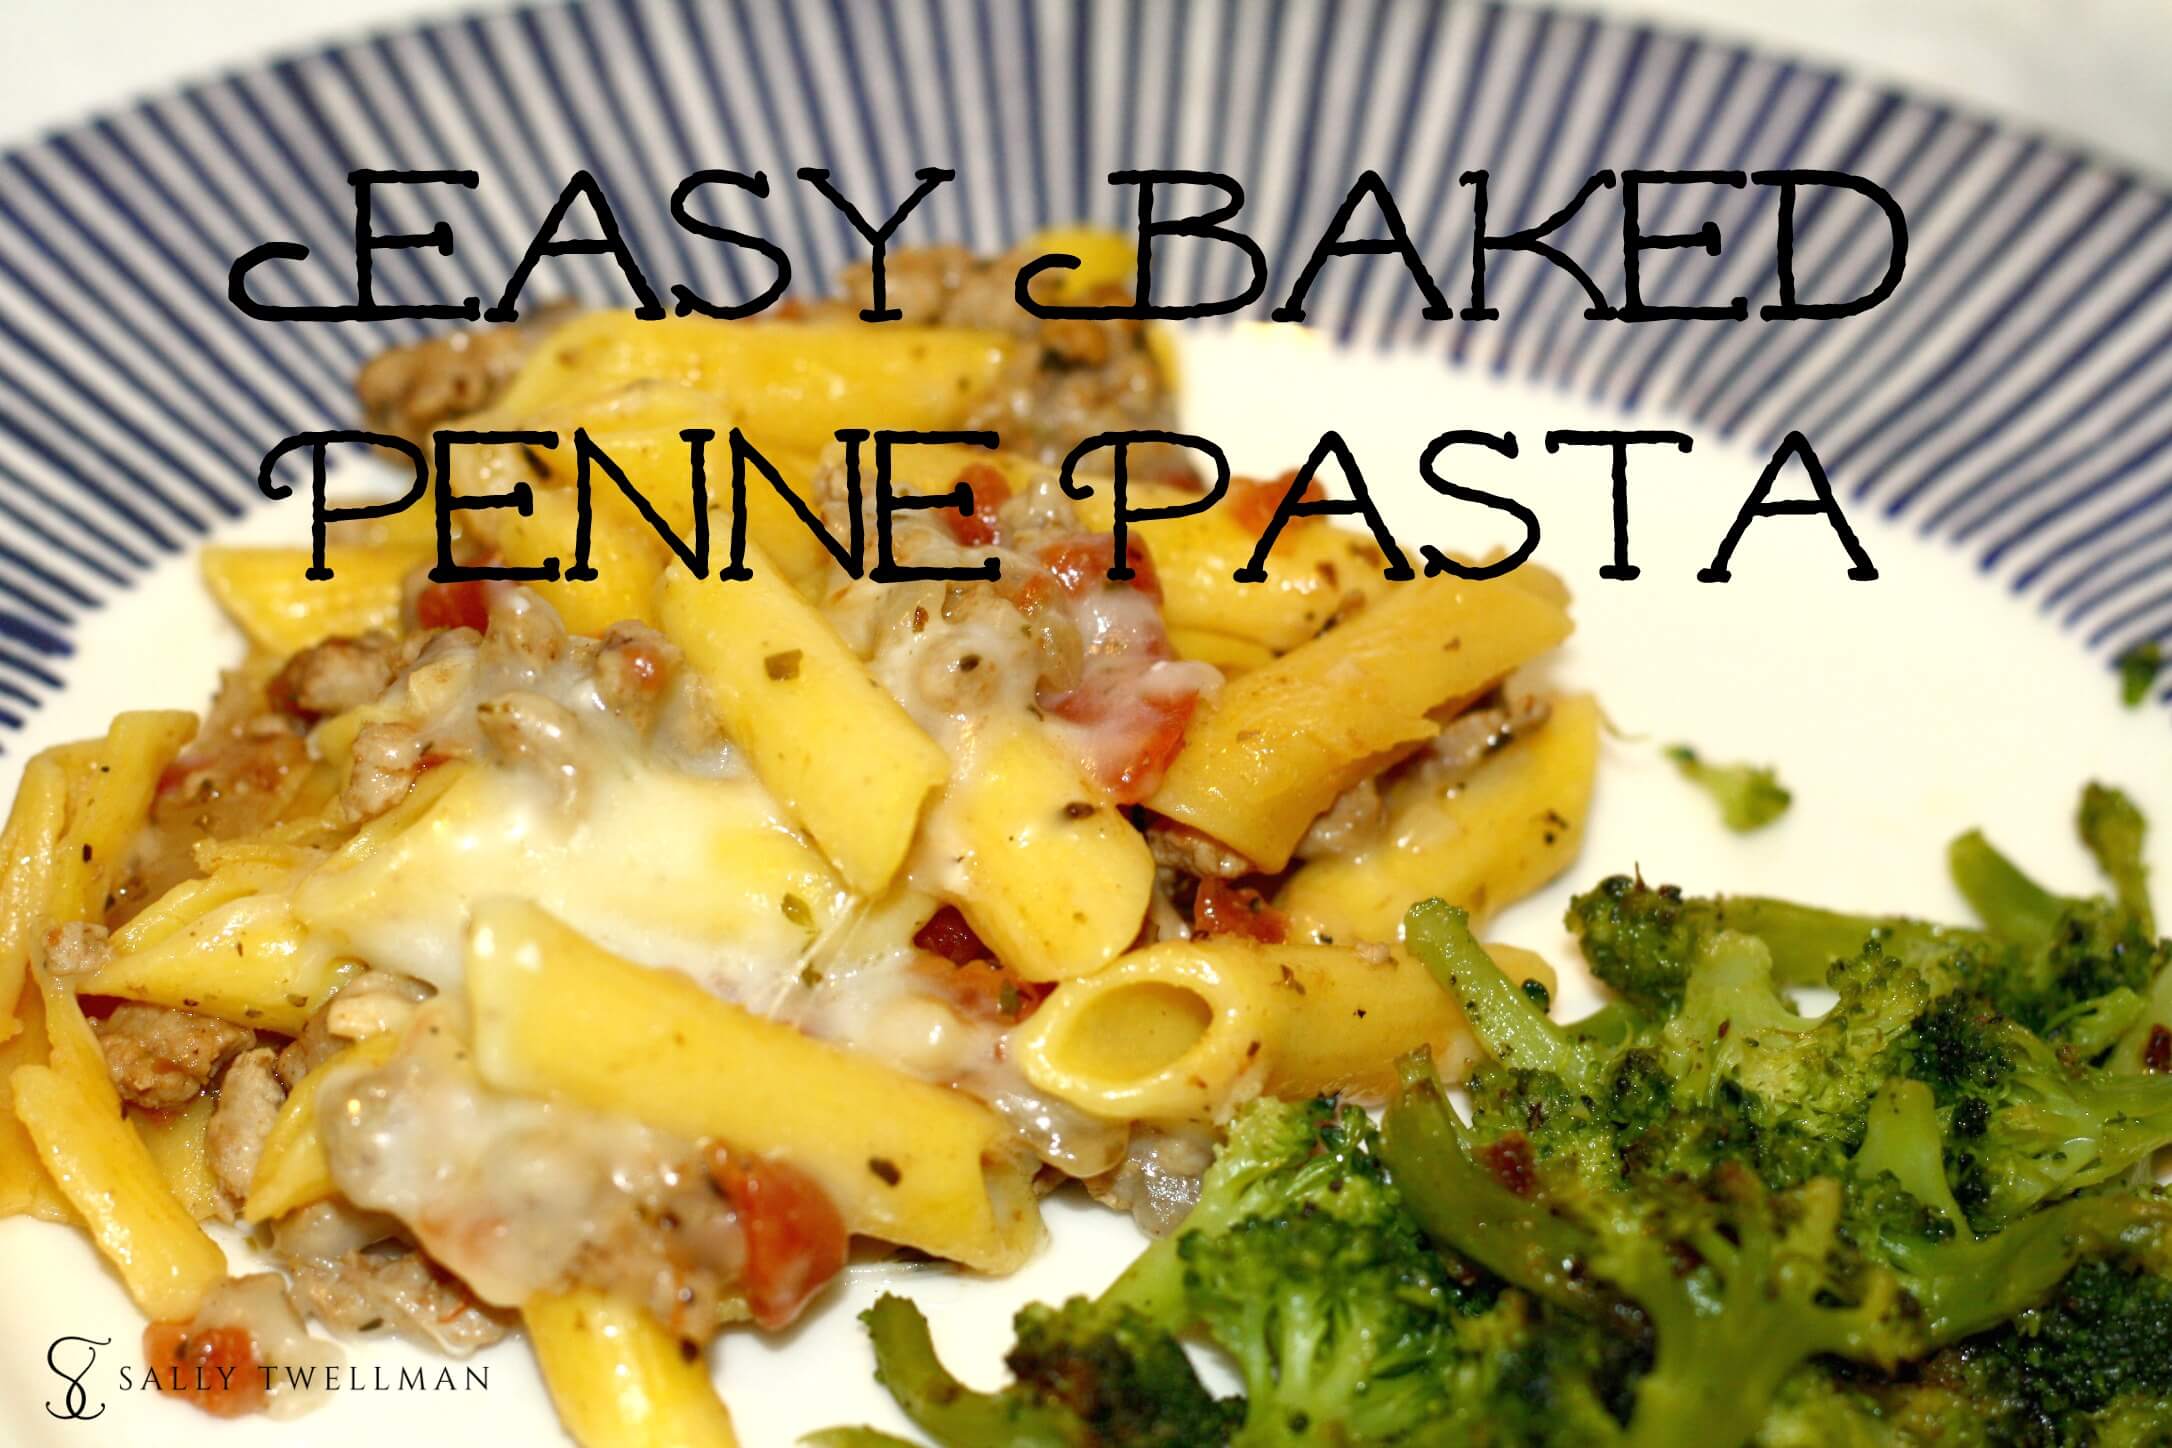 Easy Baked Penne Pasta